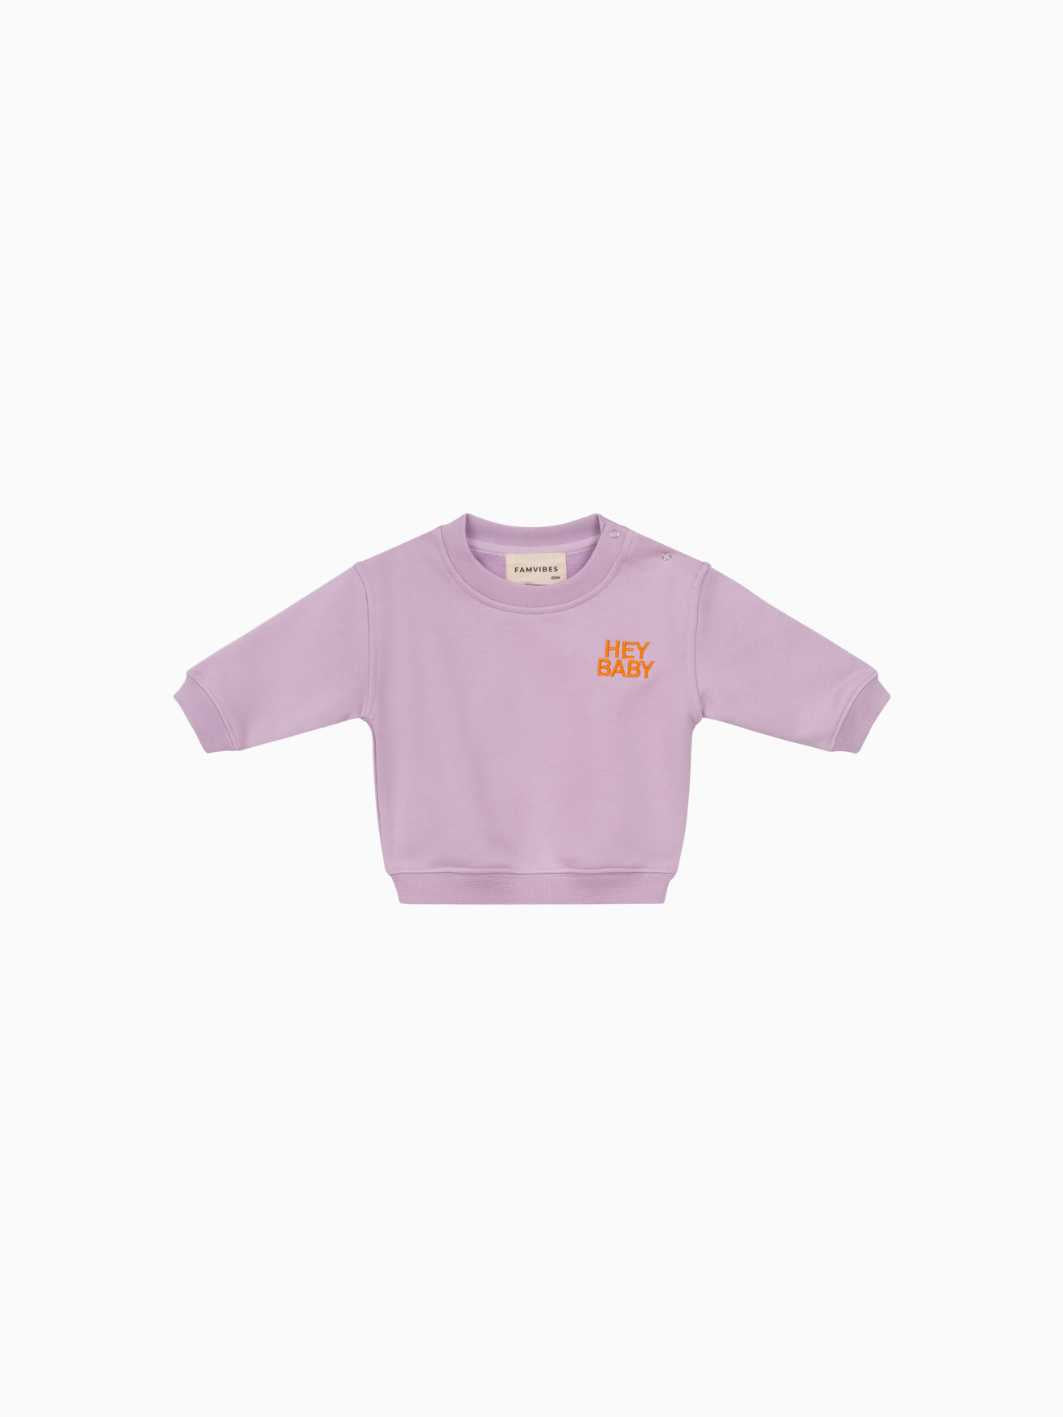 HEY BABY Sweatshirt - lavender/ orange - FAMVIBES 